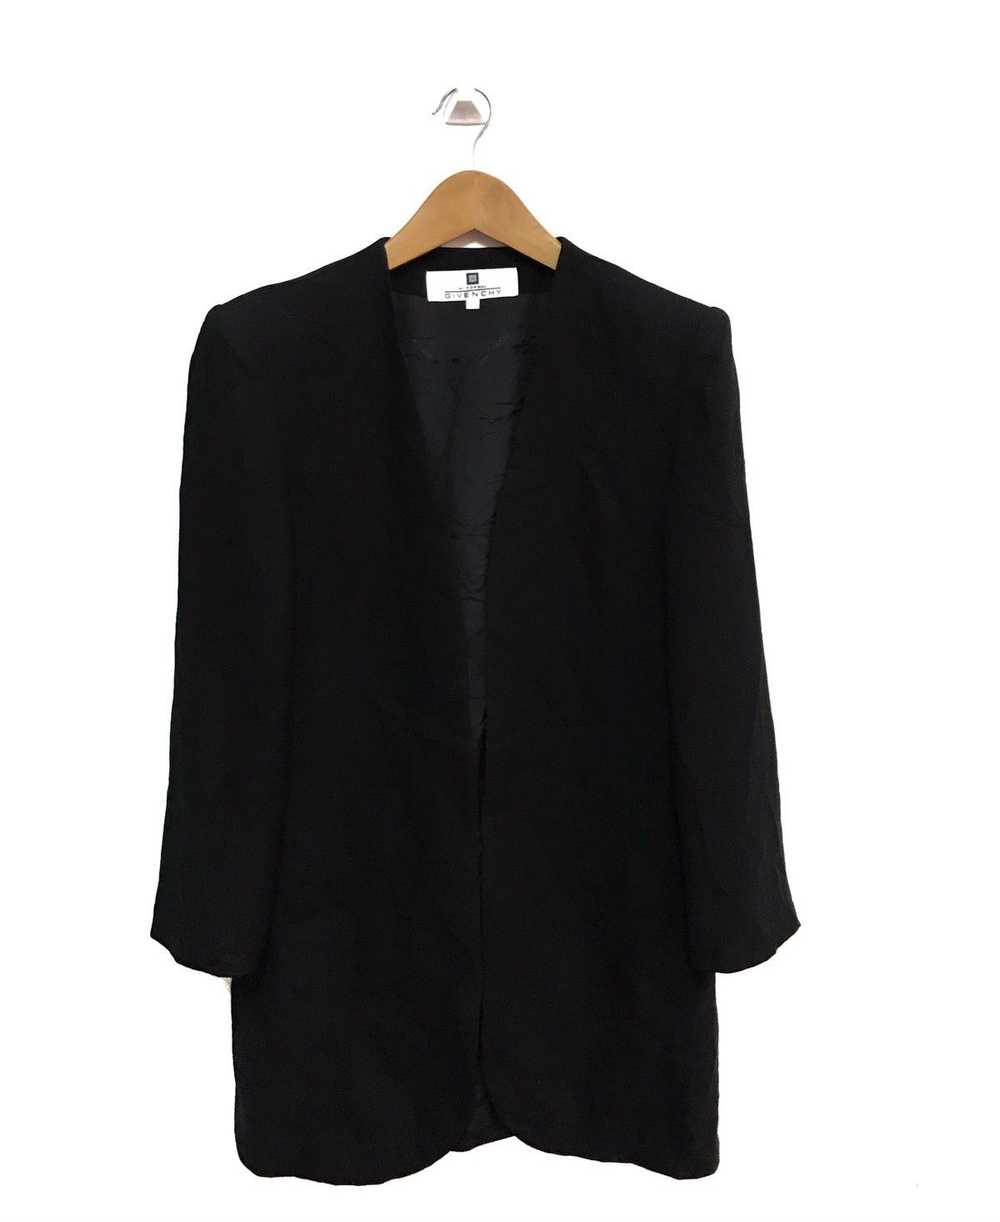 Givenchy Givenchy formal blazer coat - image 5